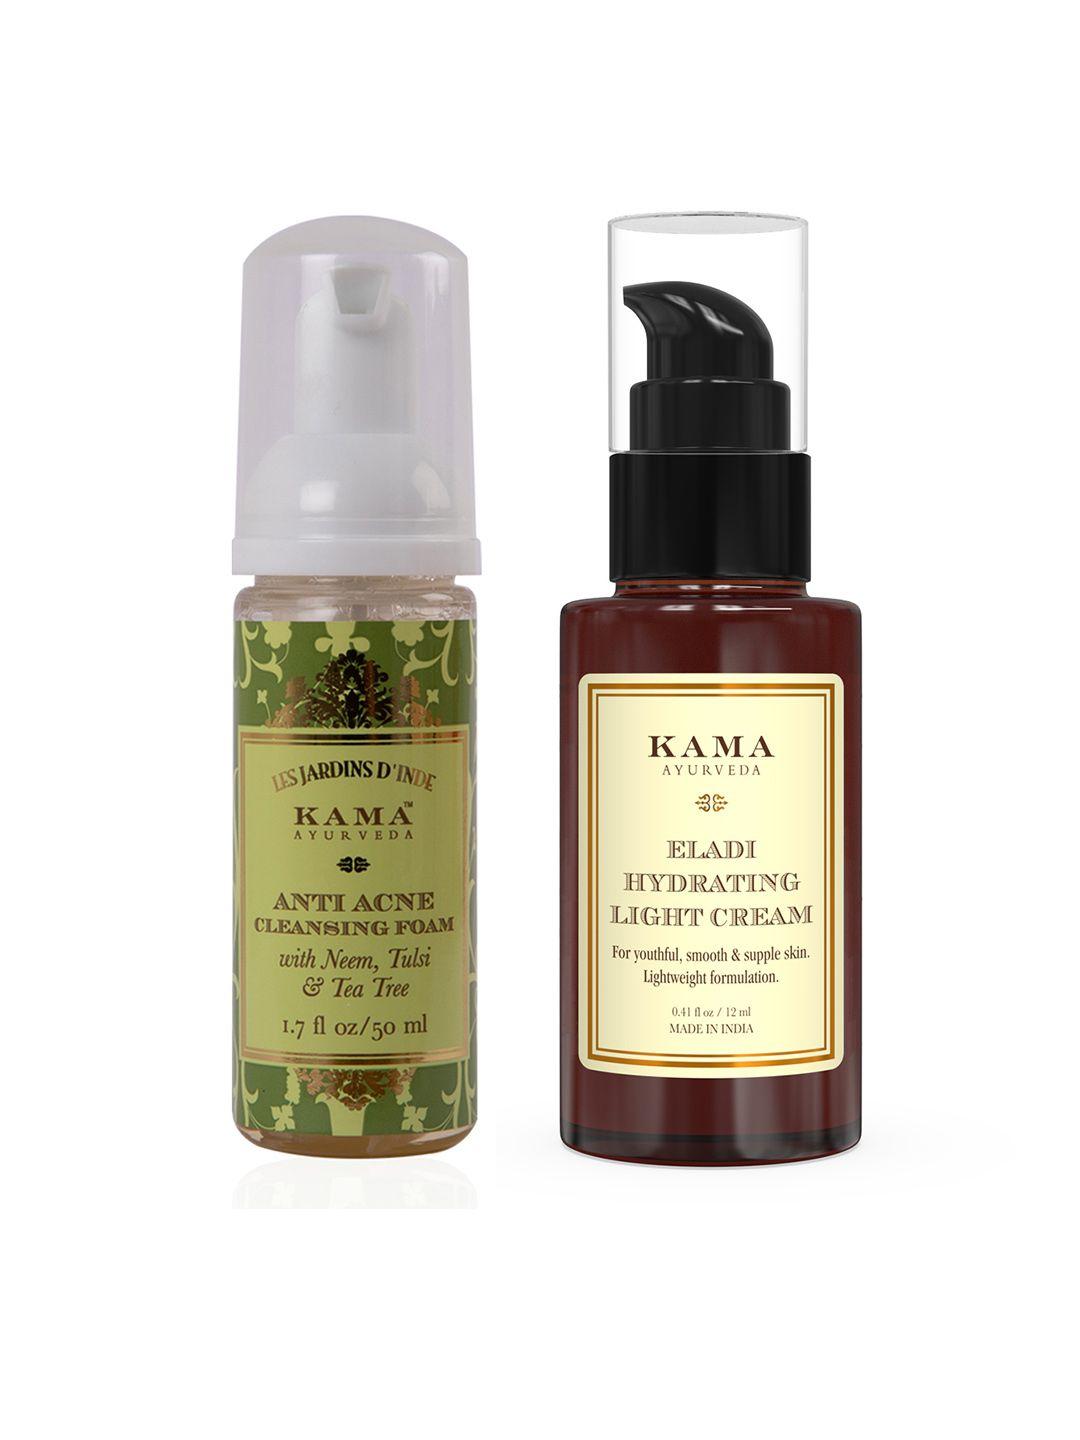 kama ayurveda set of anti-acne cleansing foam - 50ml & eladi hydrating light cream - 12ml